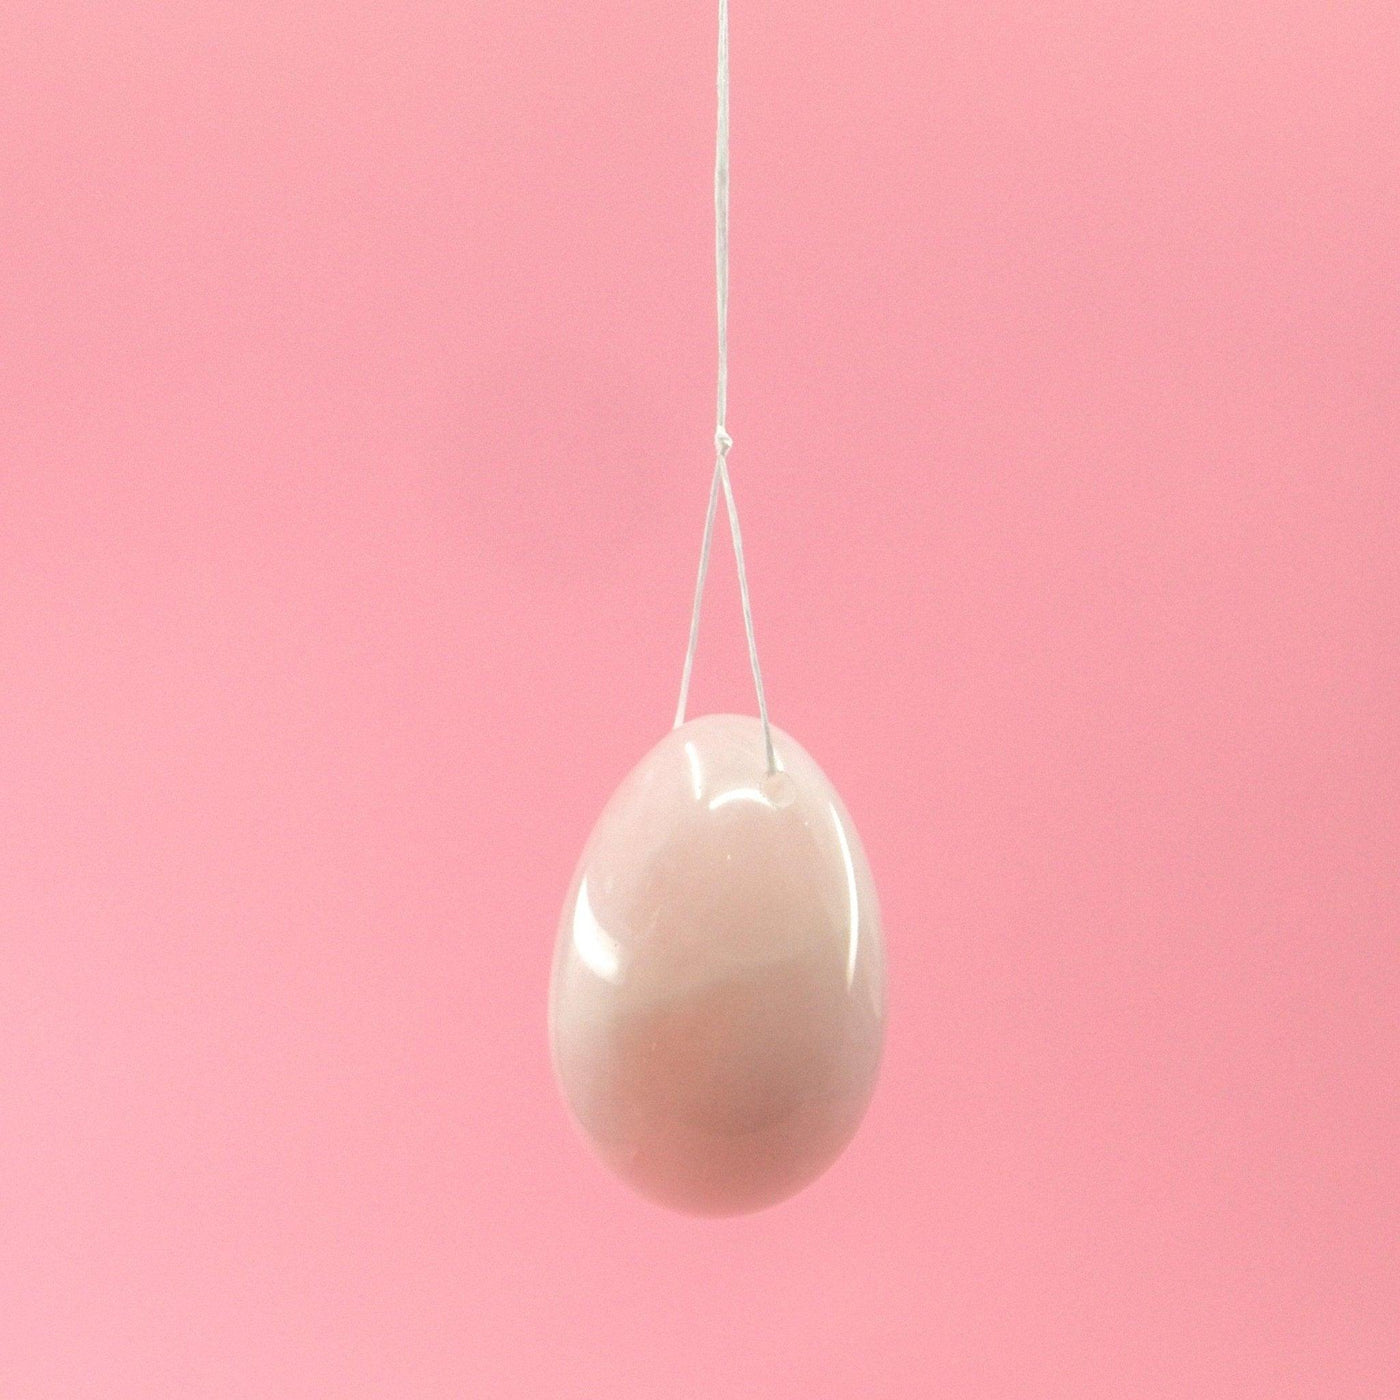 Rose Quartz Yoni Eggs - Wands of Lust Co